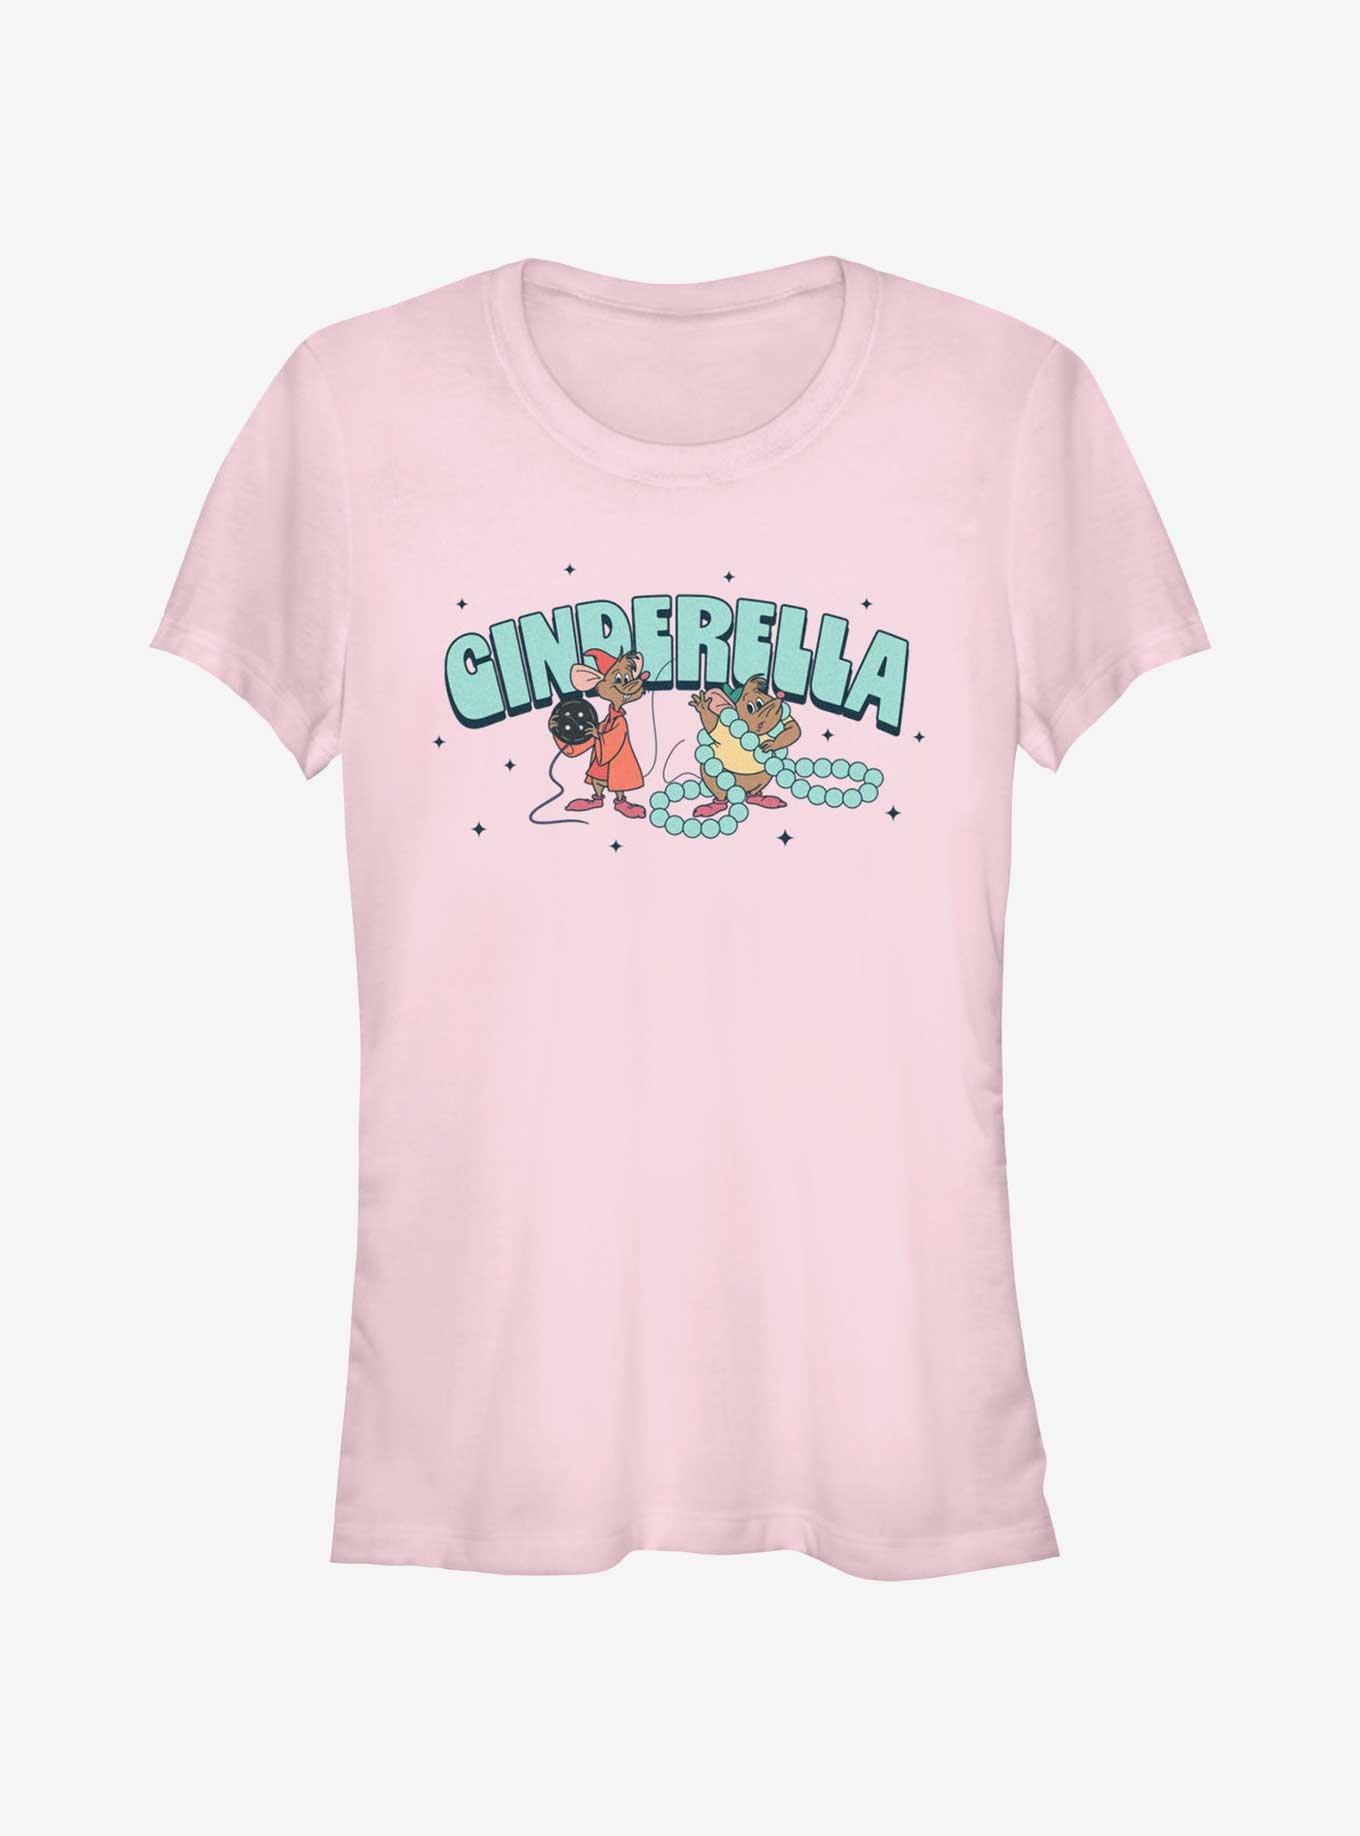 Disney Cinderella Jaq And Gus Girls T-Shirt, LIGHT PINK, hi-res